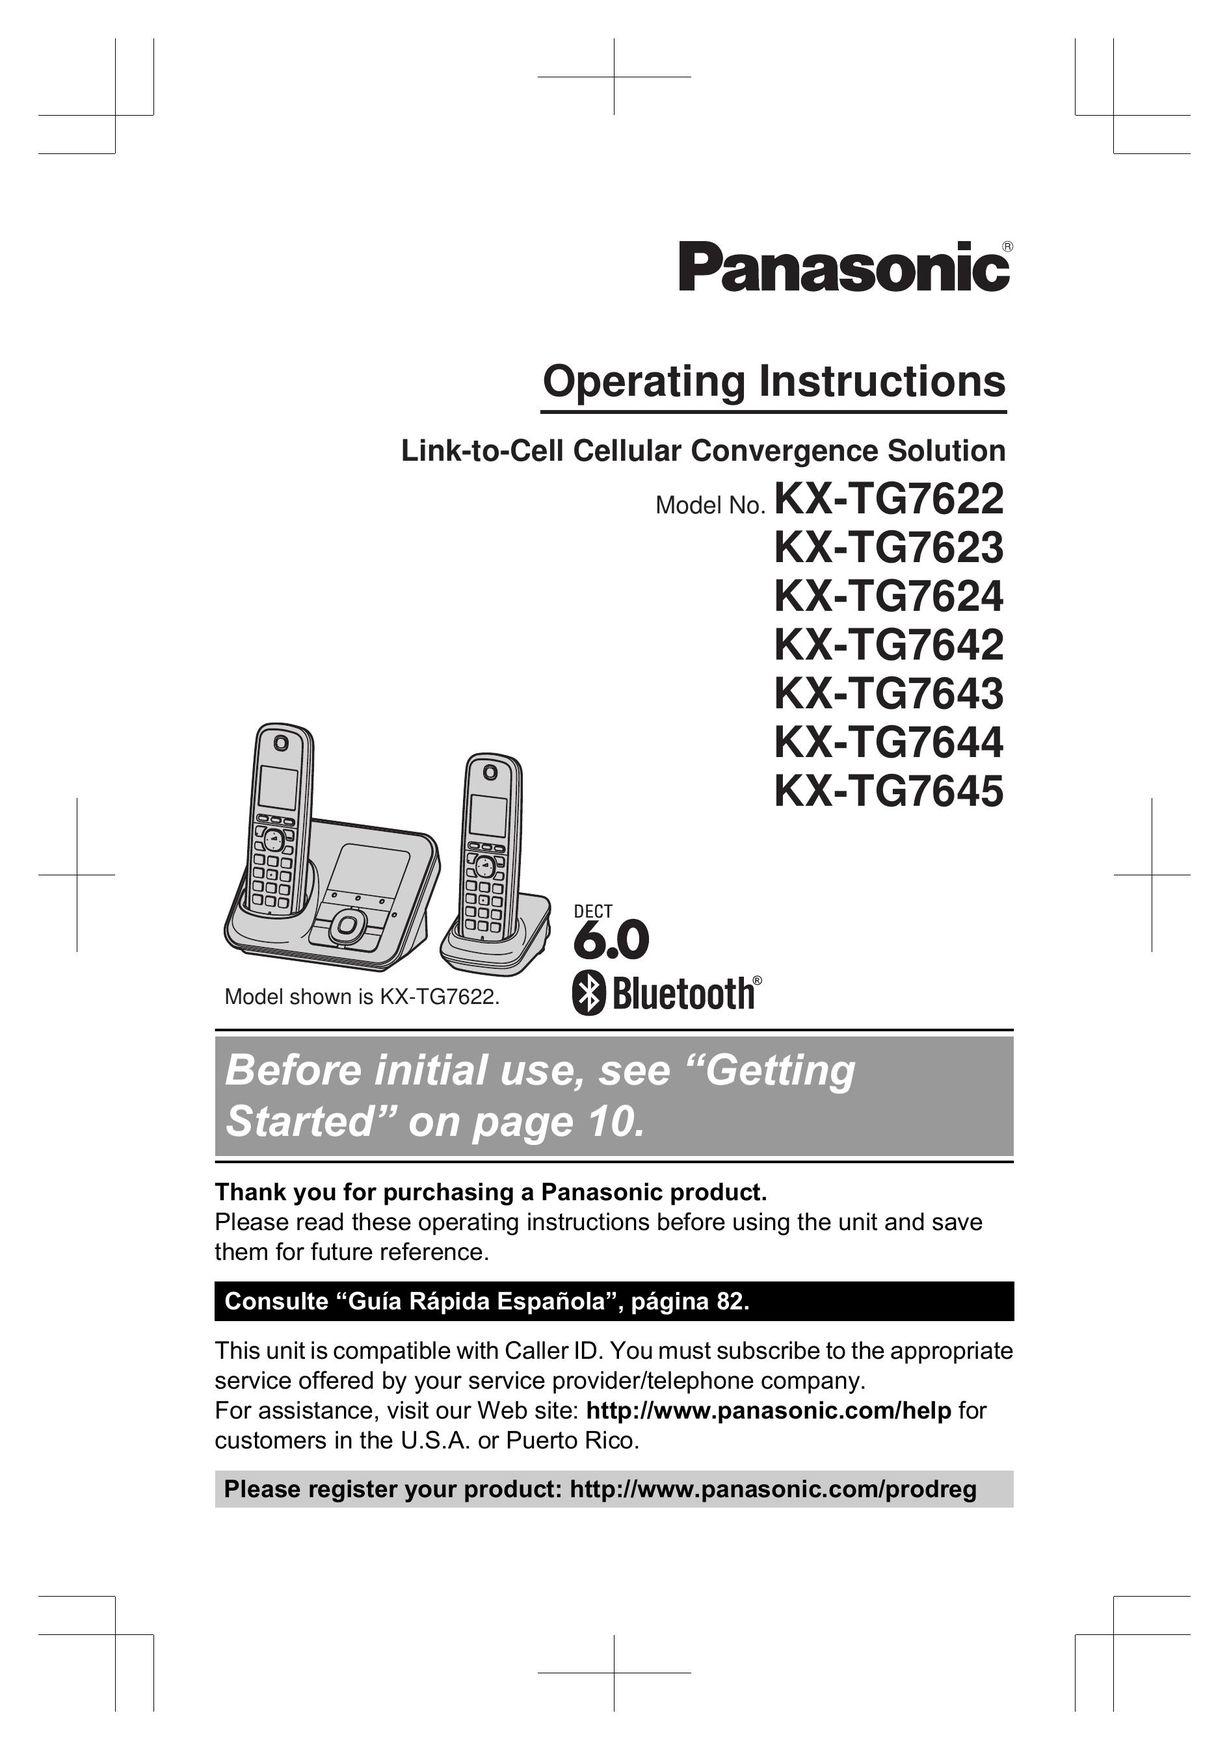 Panasonic KX-TG7643M Bluetooth Headset User Manual